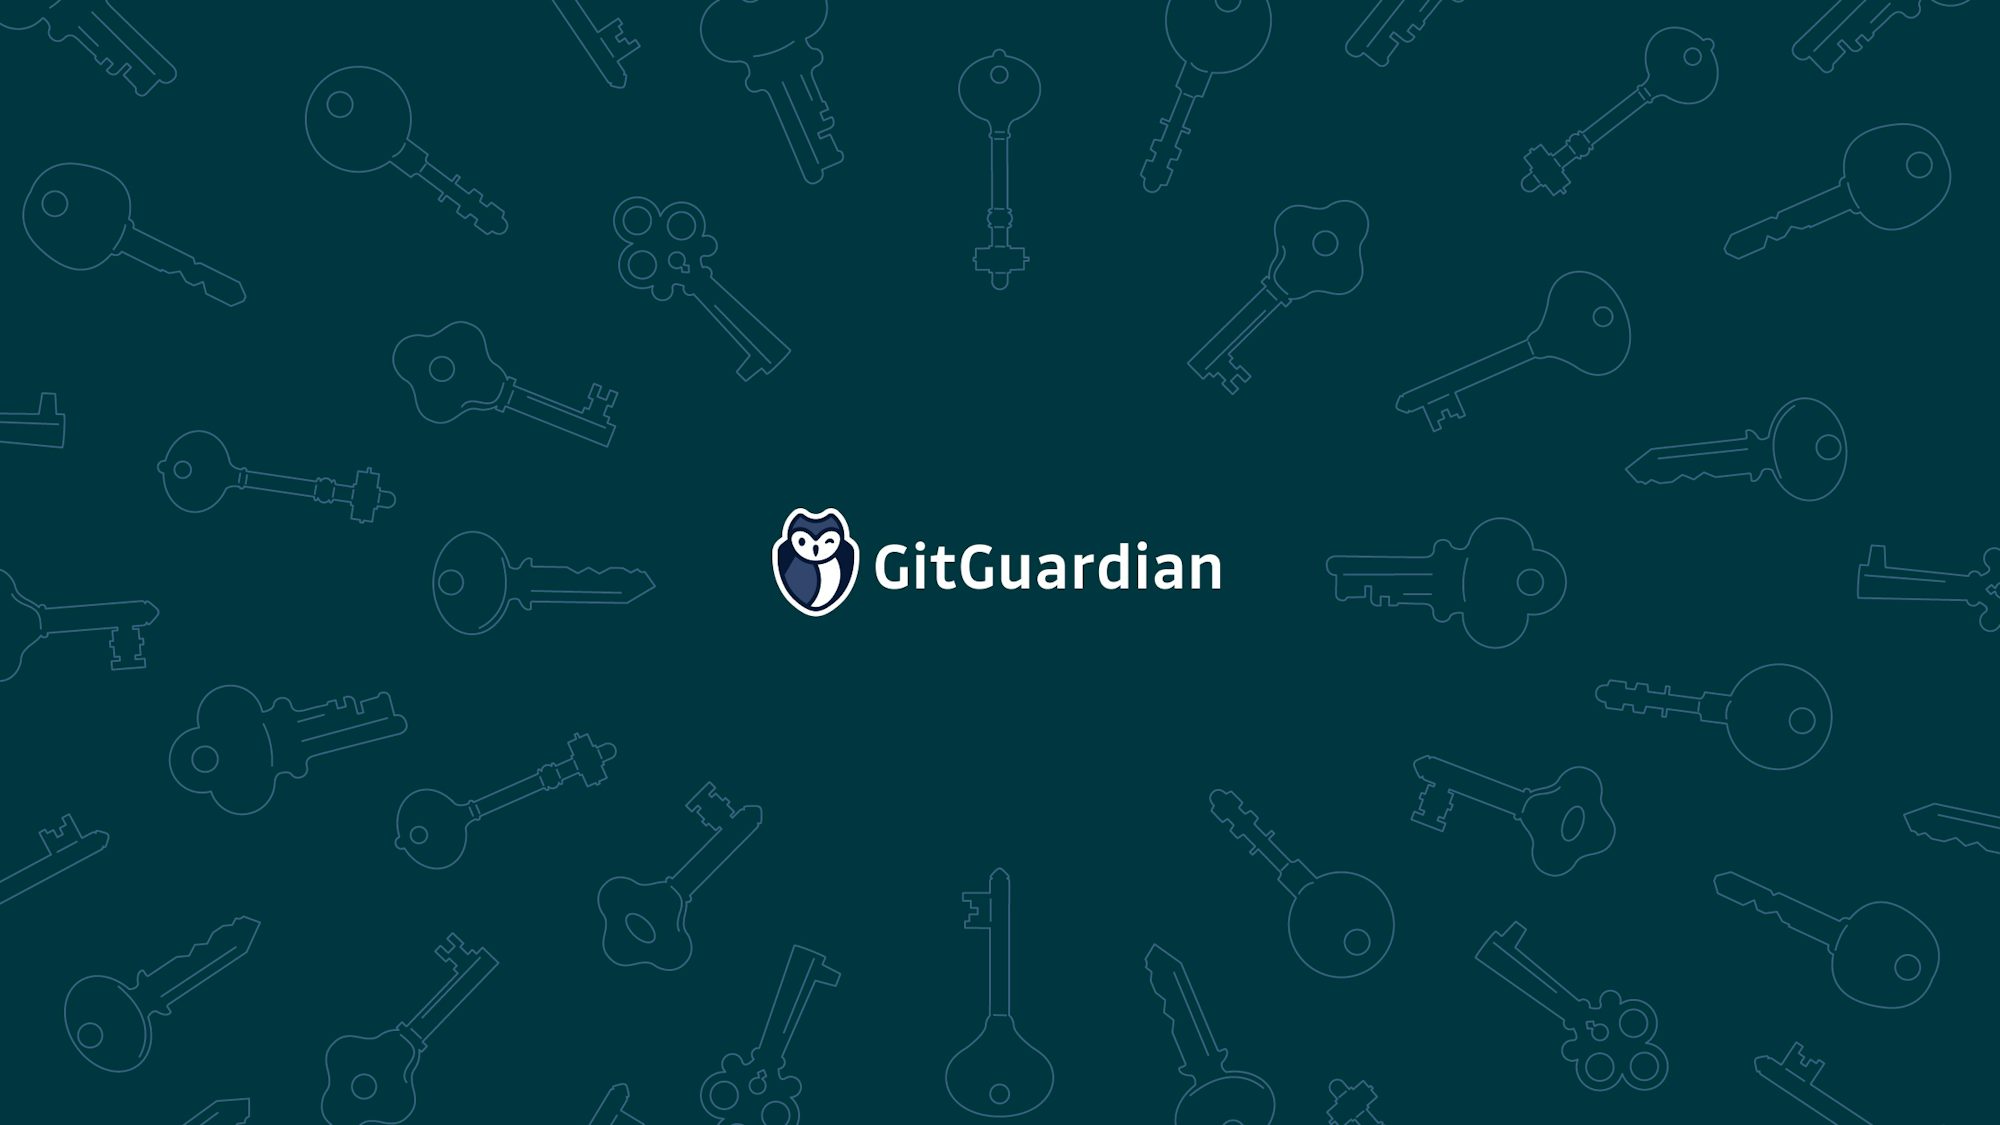 Stylized security keys surround the GitGuardian logo.